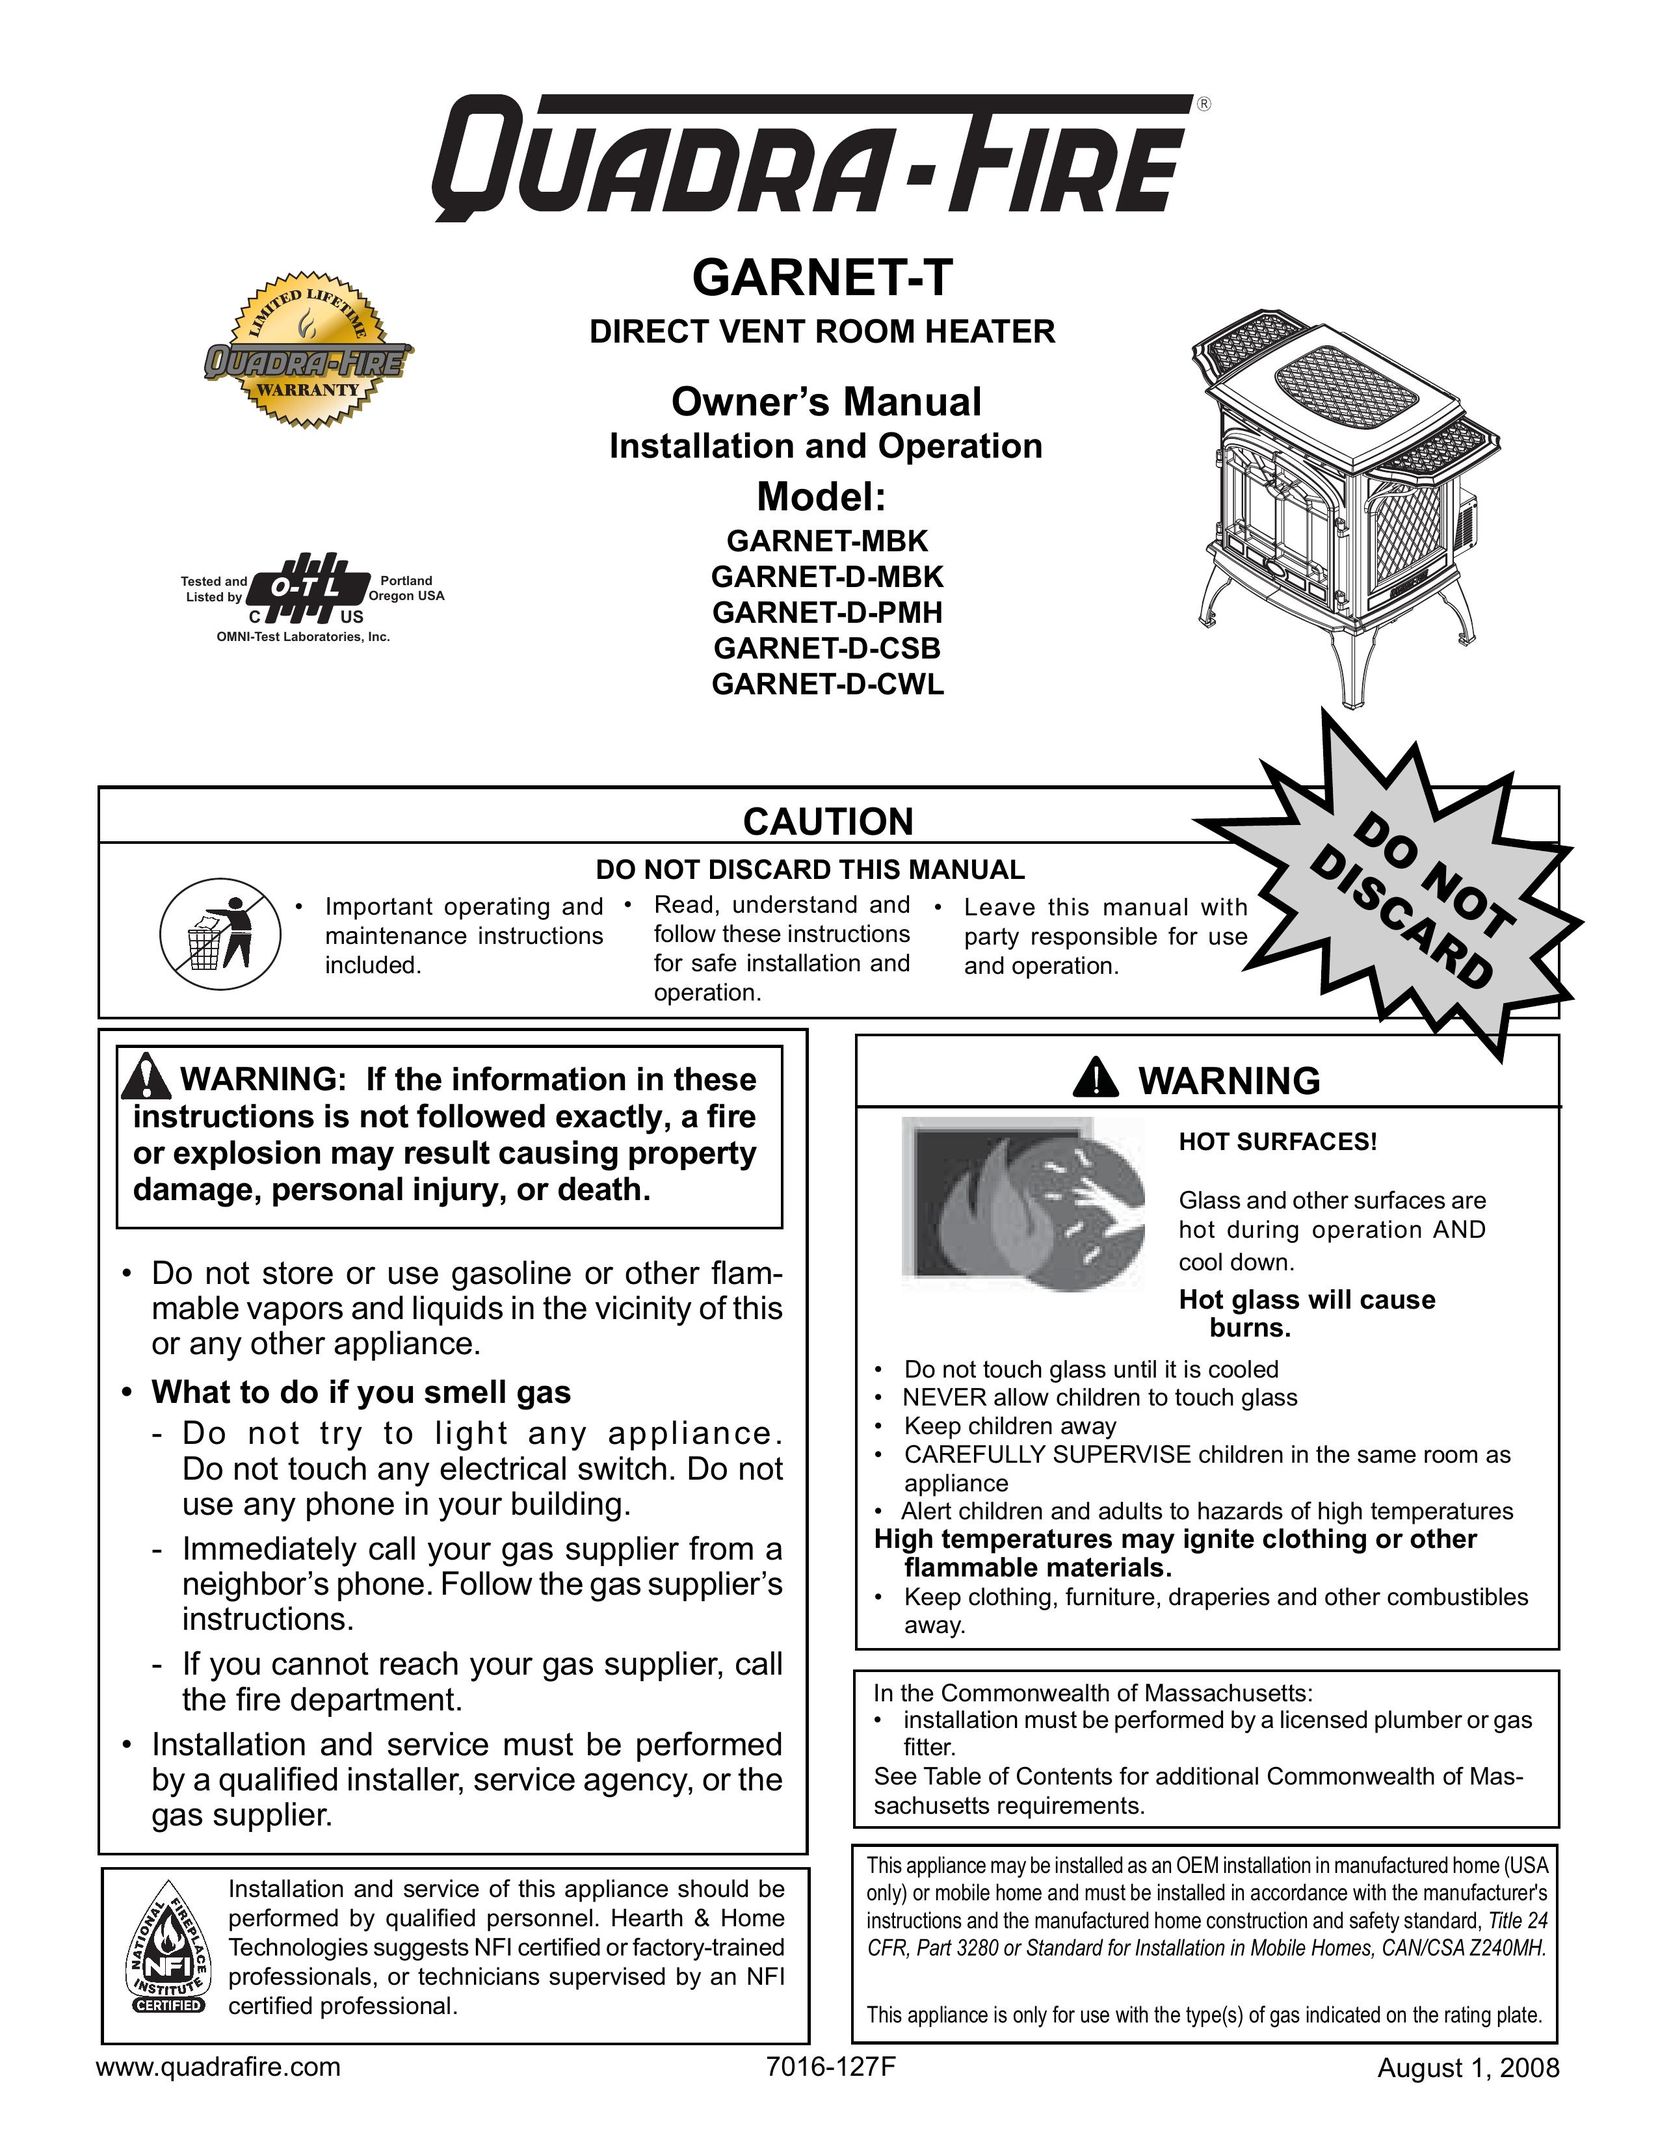 Quadra-Fire GARNET-D-PMH Electric Heater User Manual